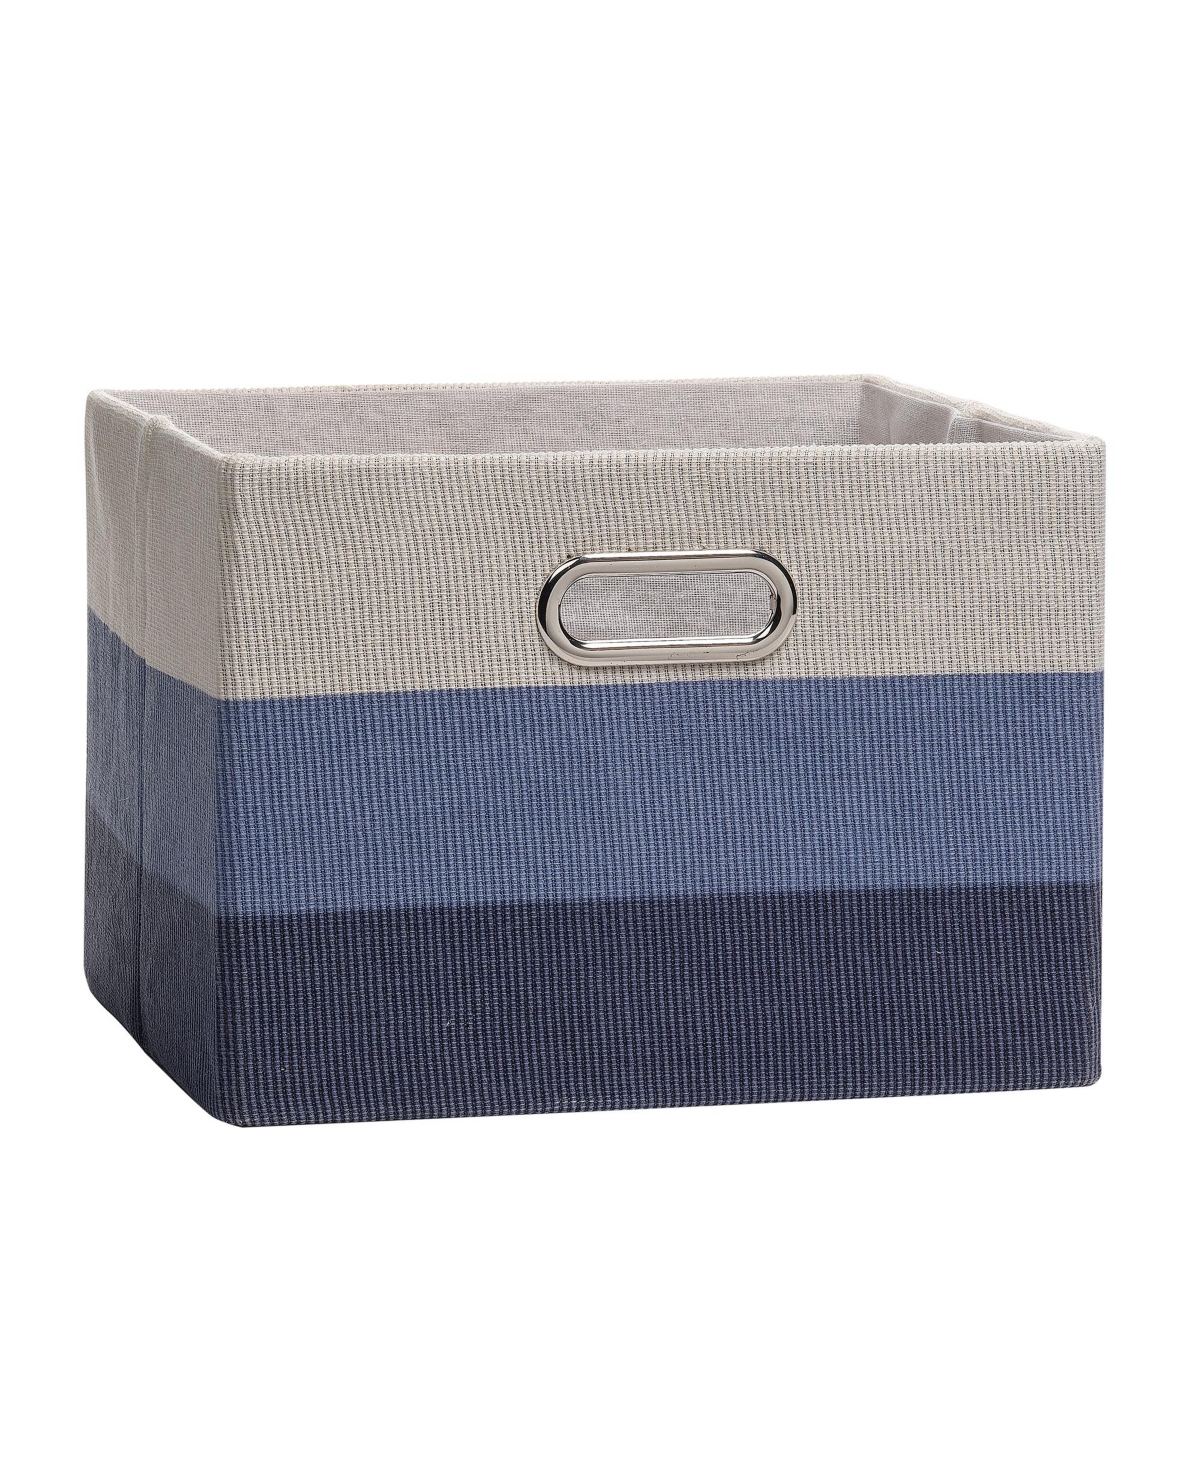 Blue Ombre Foldable/Collapsible Storage Bin/Basket - Blue